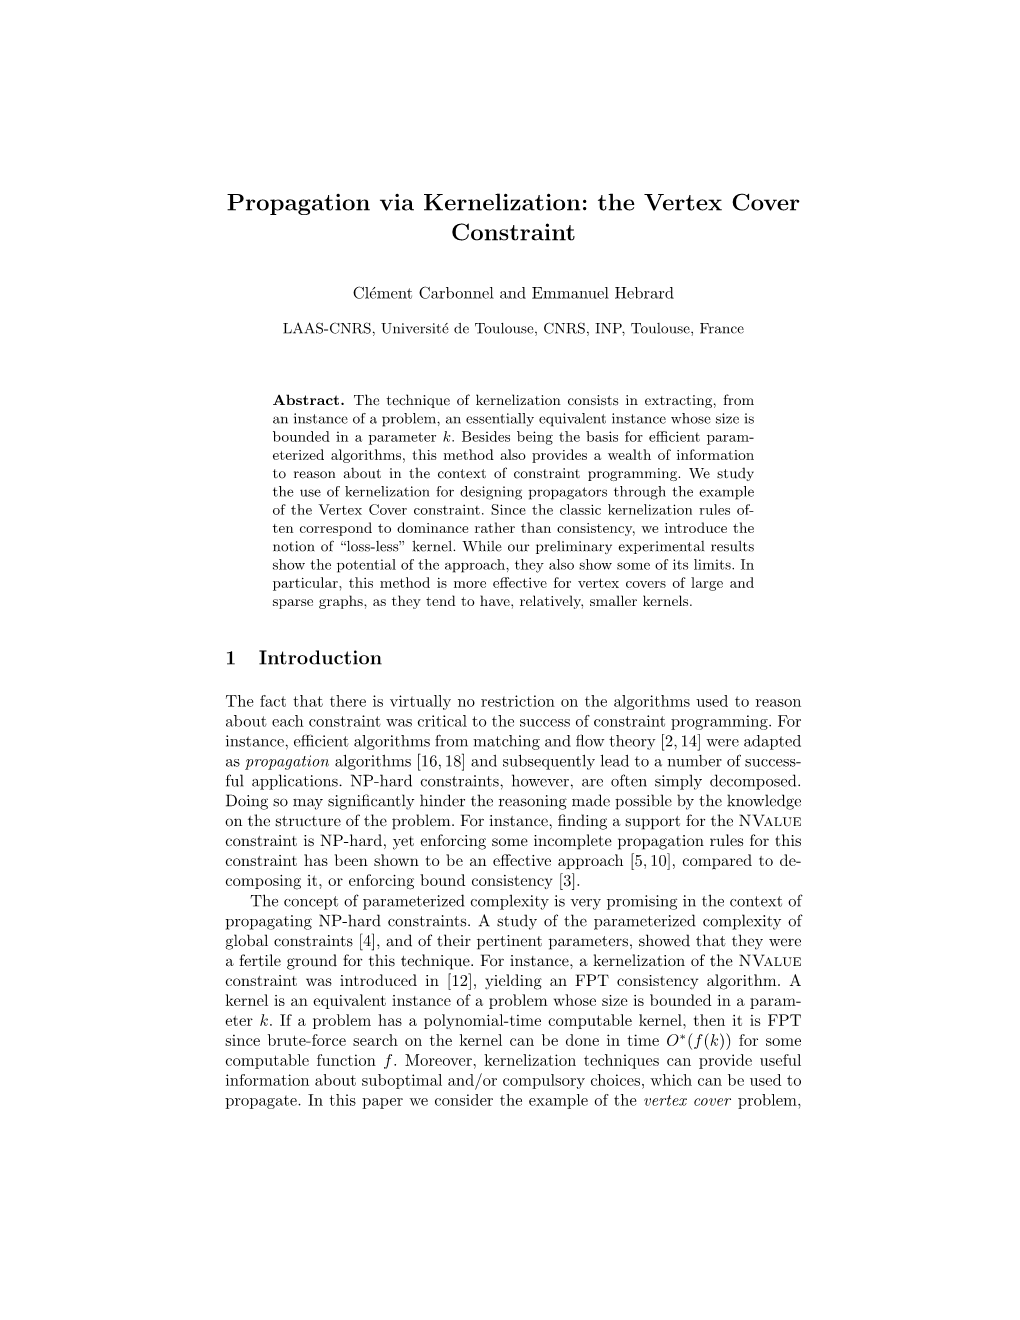 Propagation Via Kernelization: the Vertex Cover Constraint